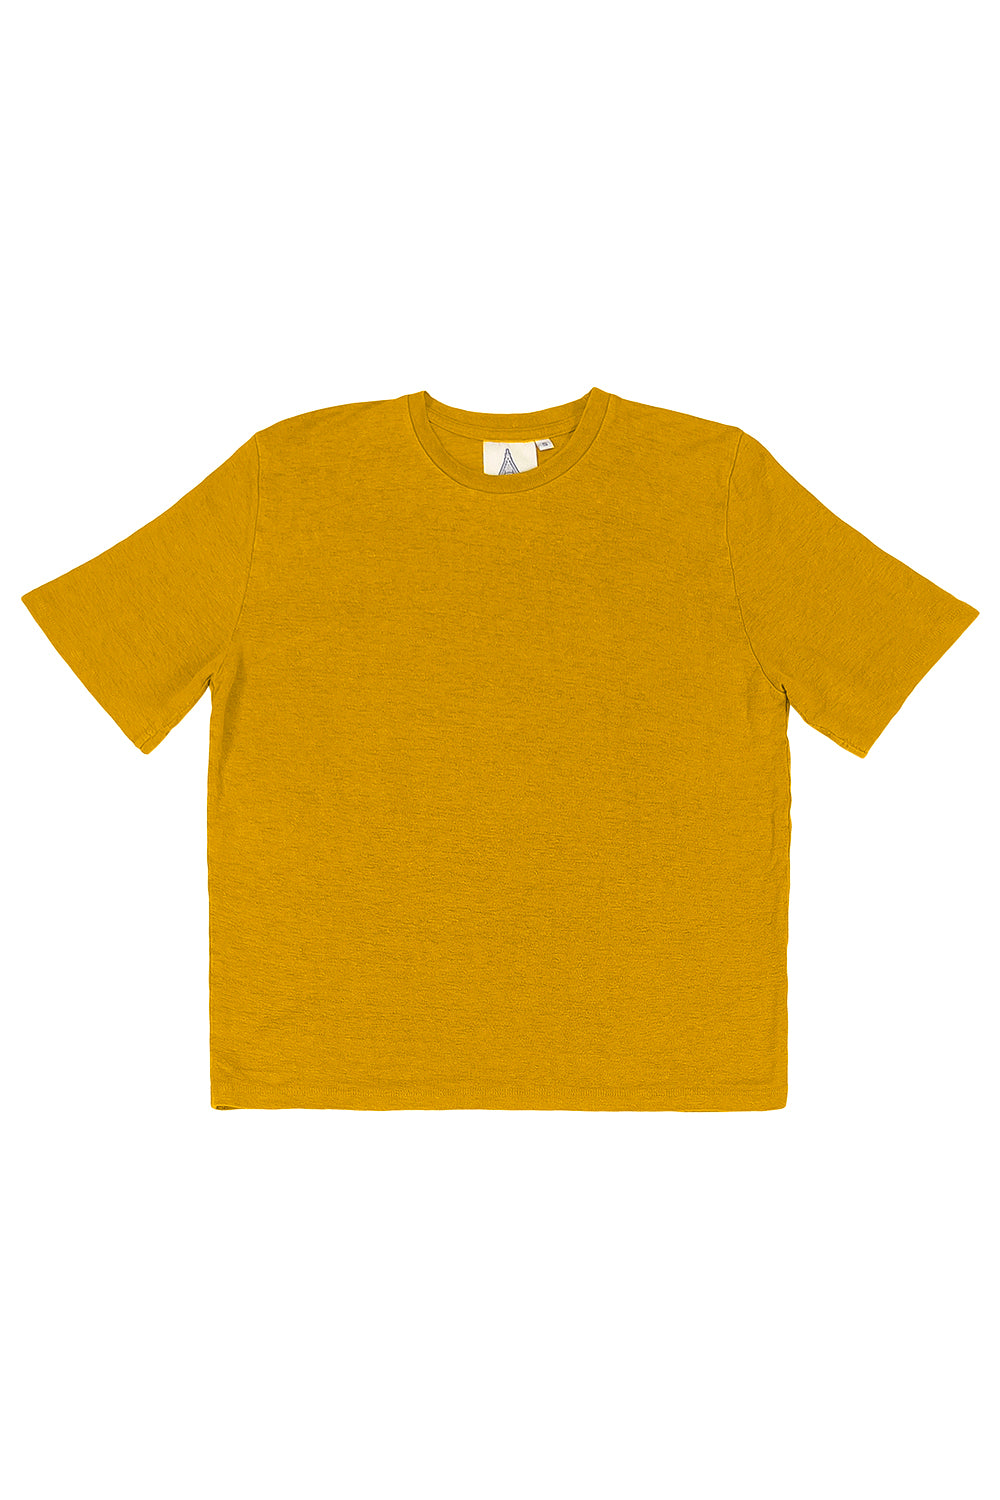 Dakota - 100% Hemp Cropped Tee | Jungmaven Hemp Clothing & Accessories / Color: Spicy Mustard